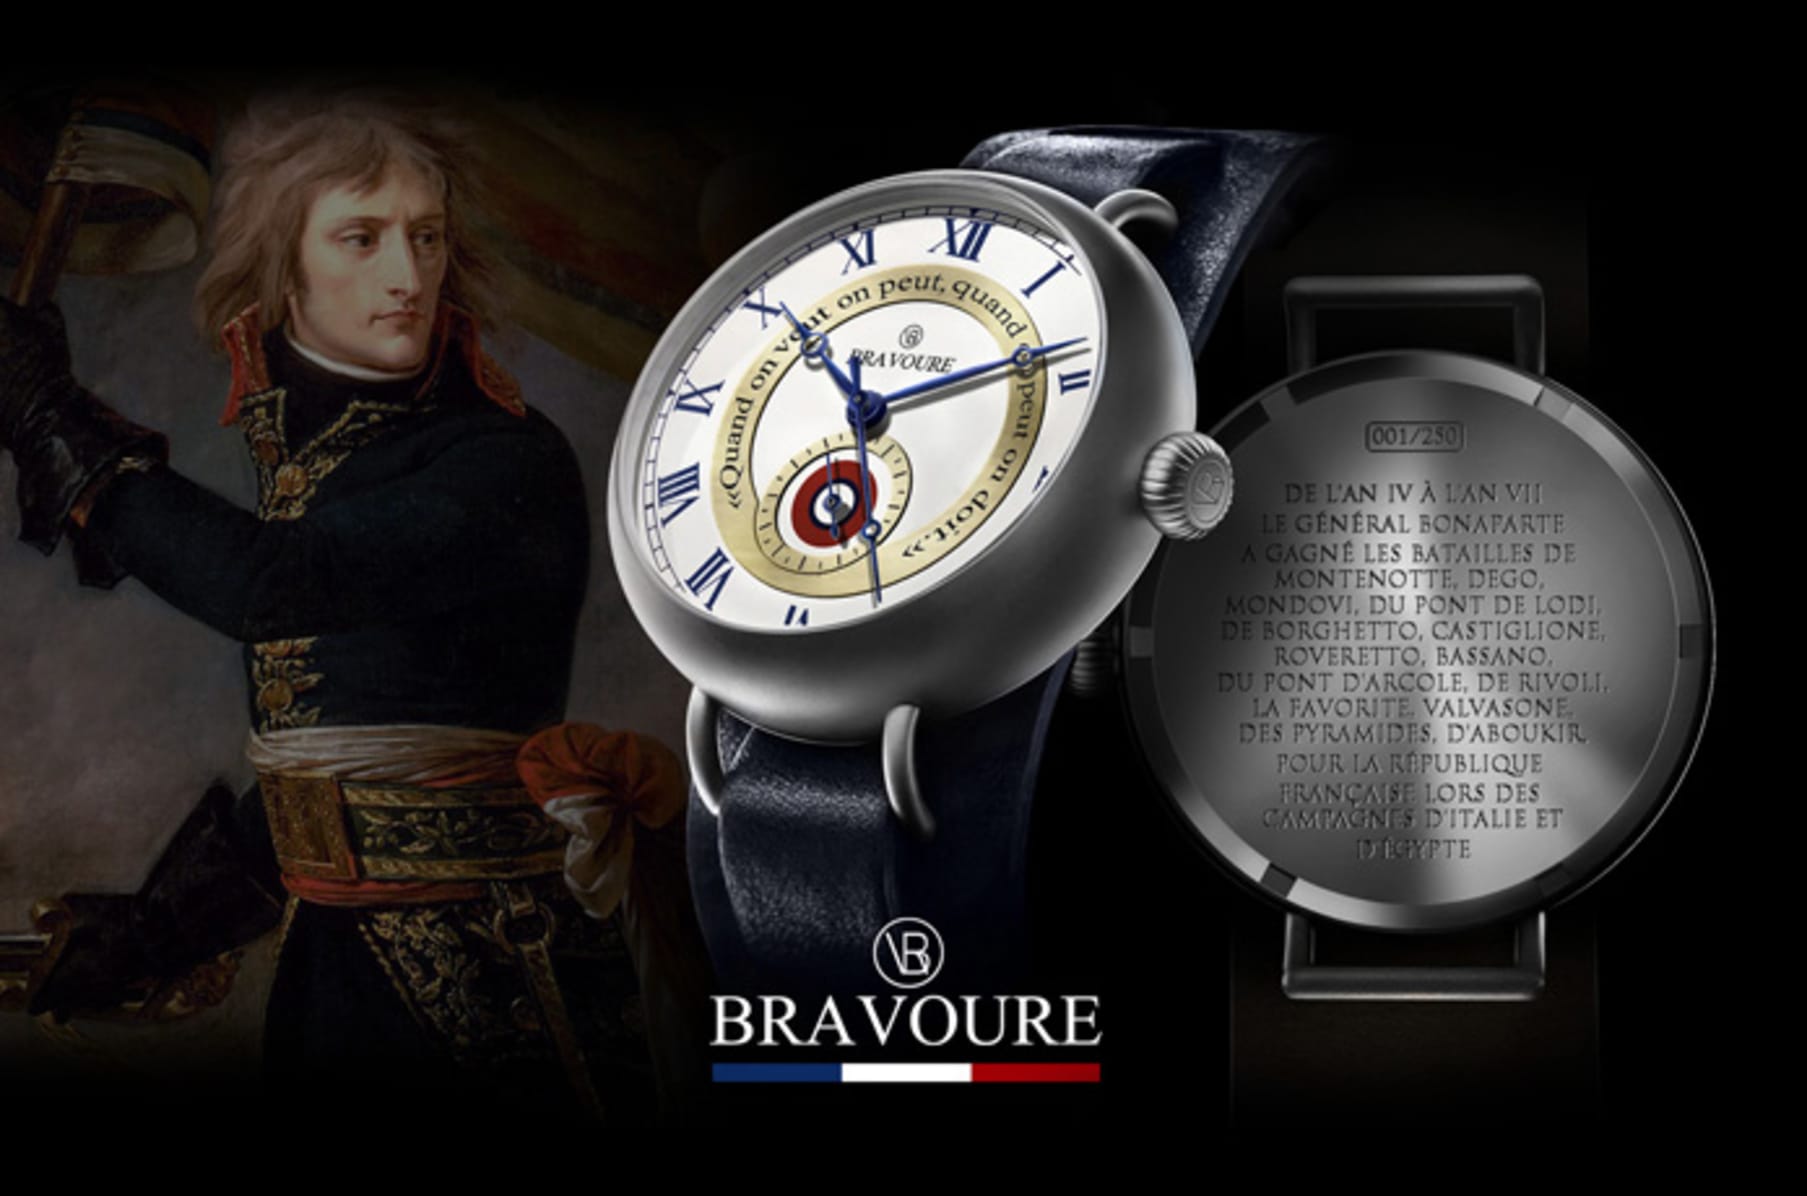 Meet The 330 General Bonaparte Automatic Watch Indiegogo